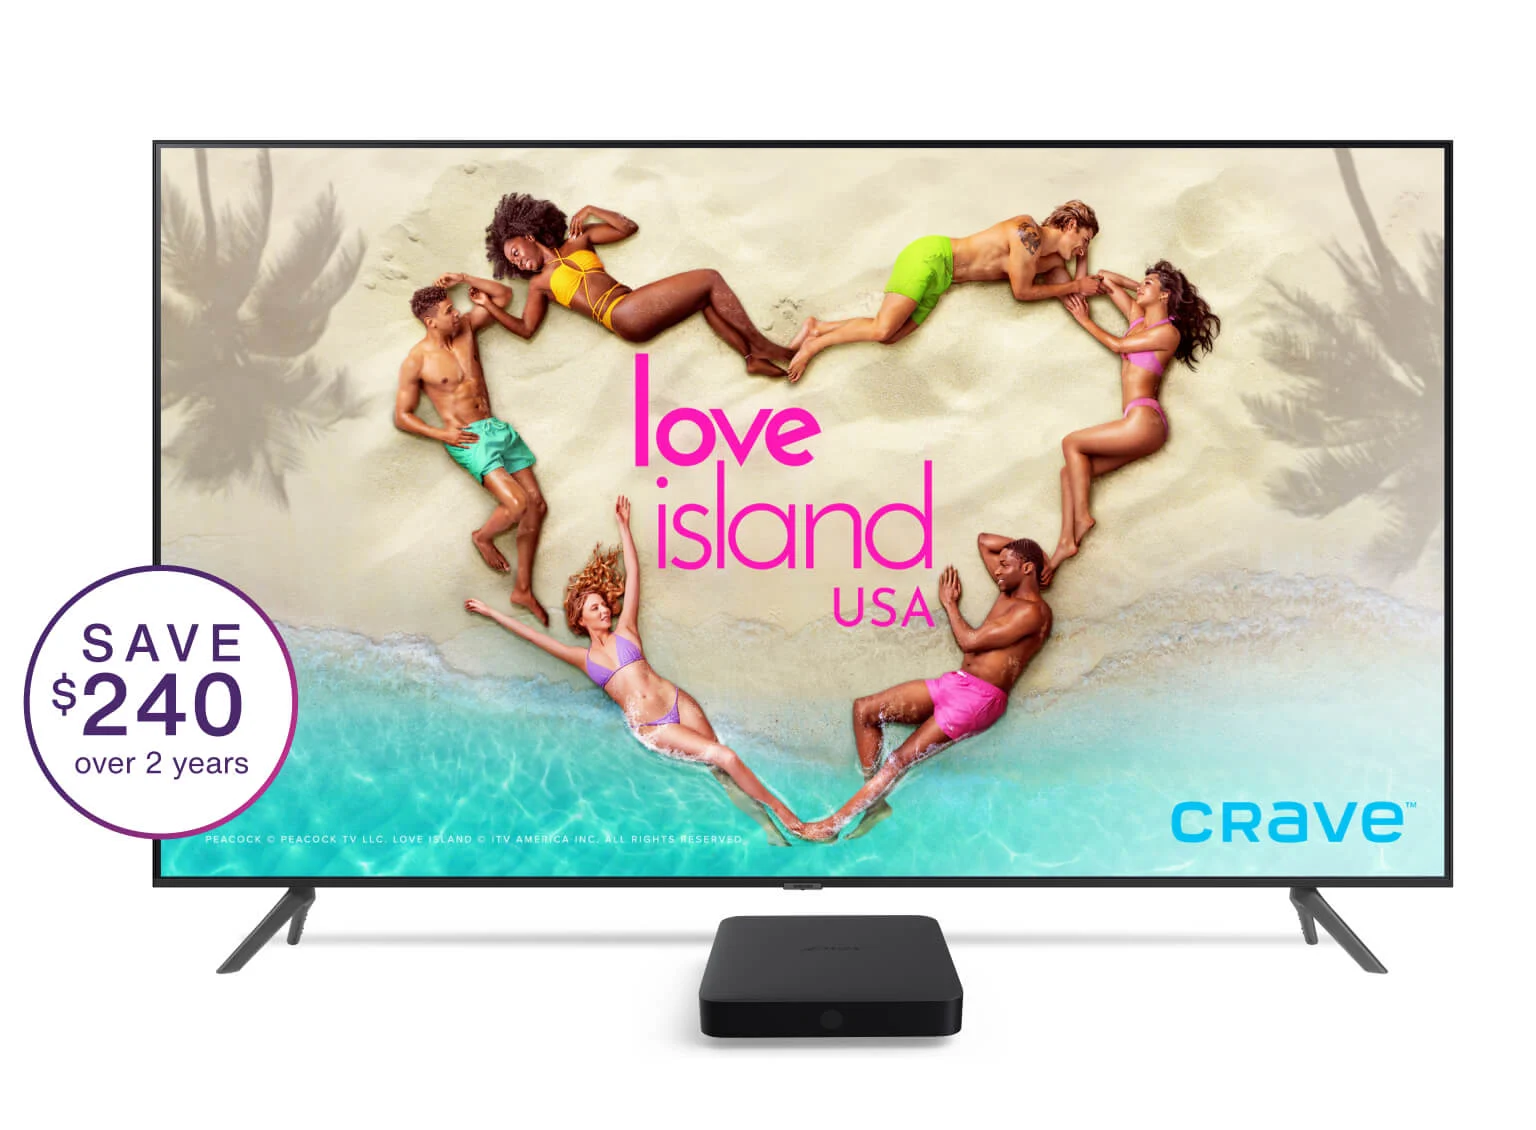 A TV displays Love Island USA along with a TELUS TV Digital Box.